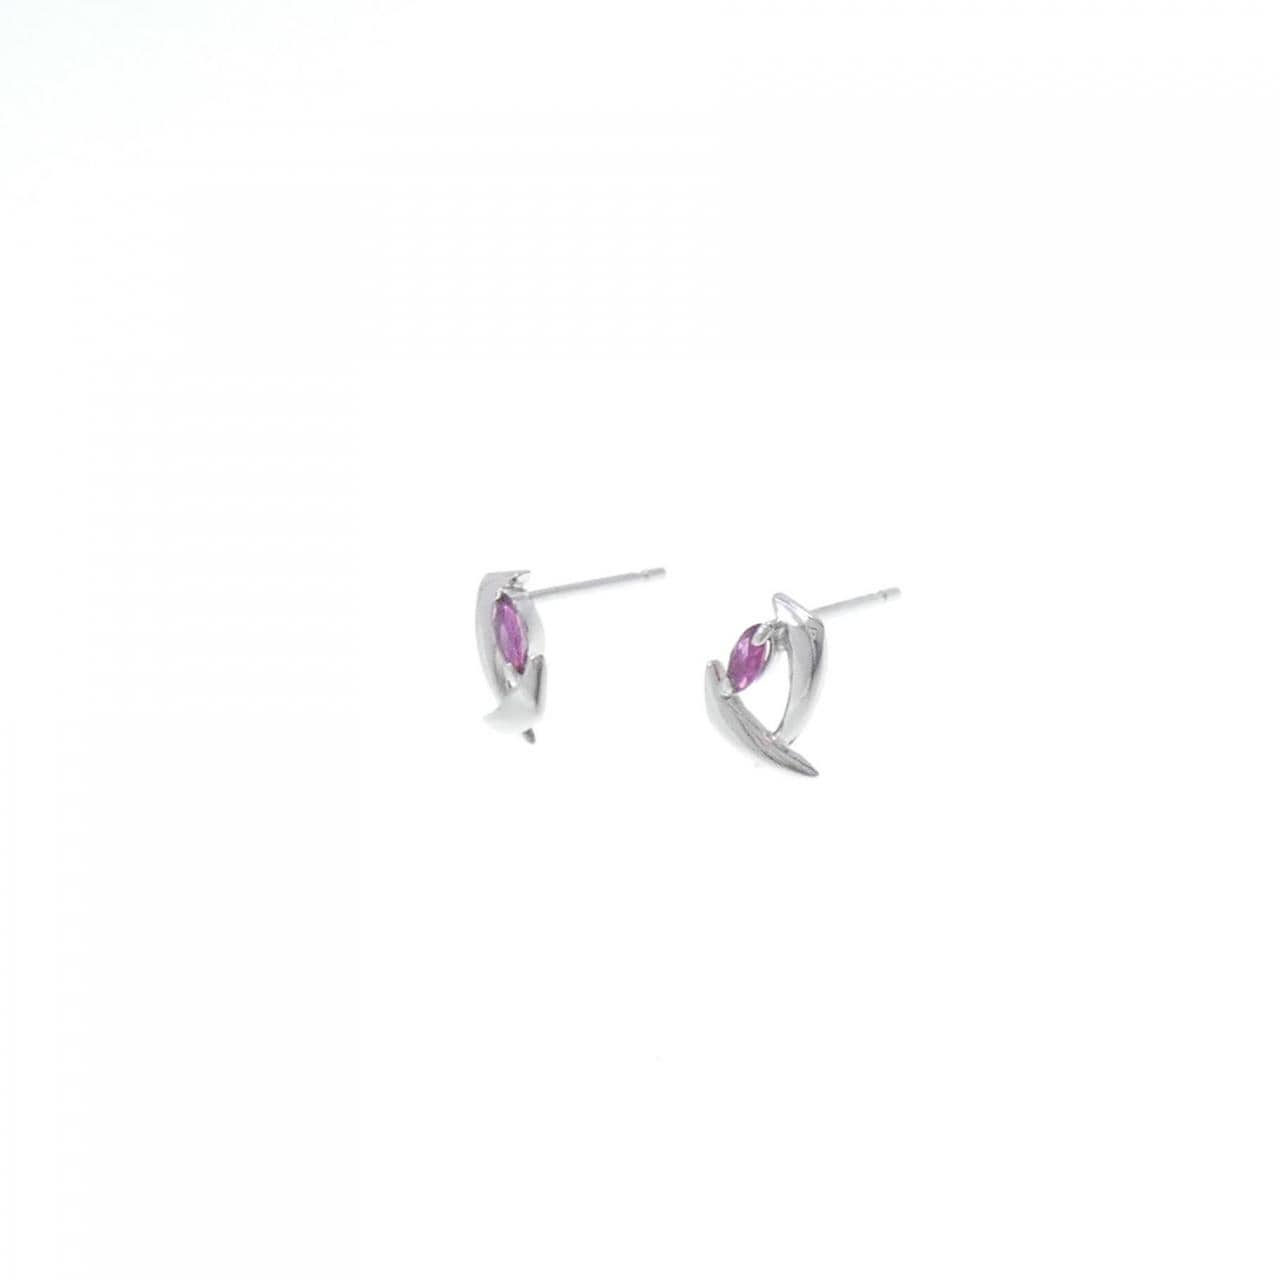 PT ruby earrings